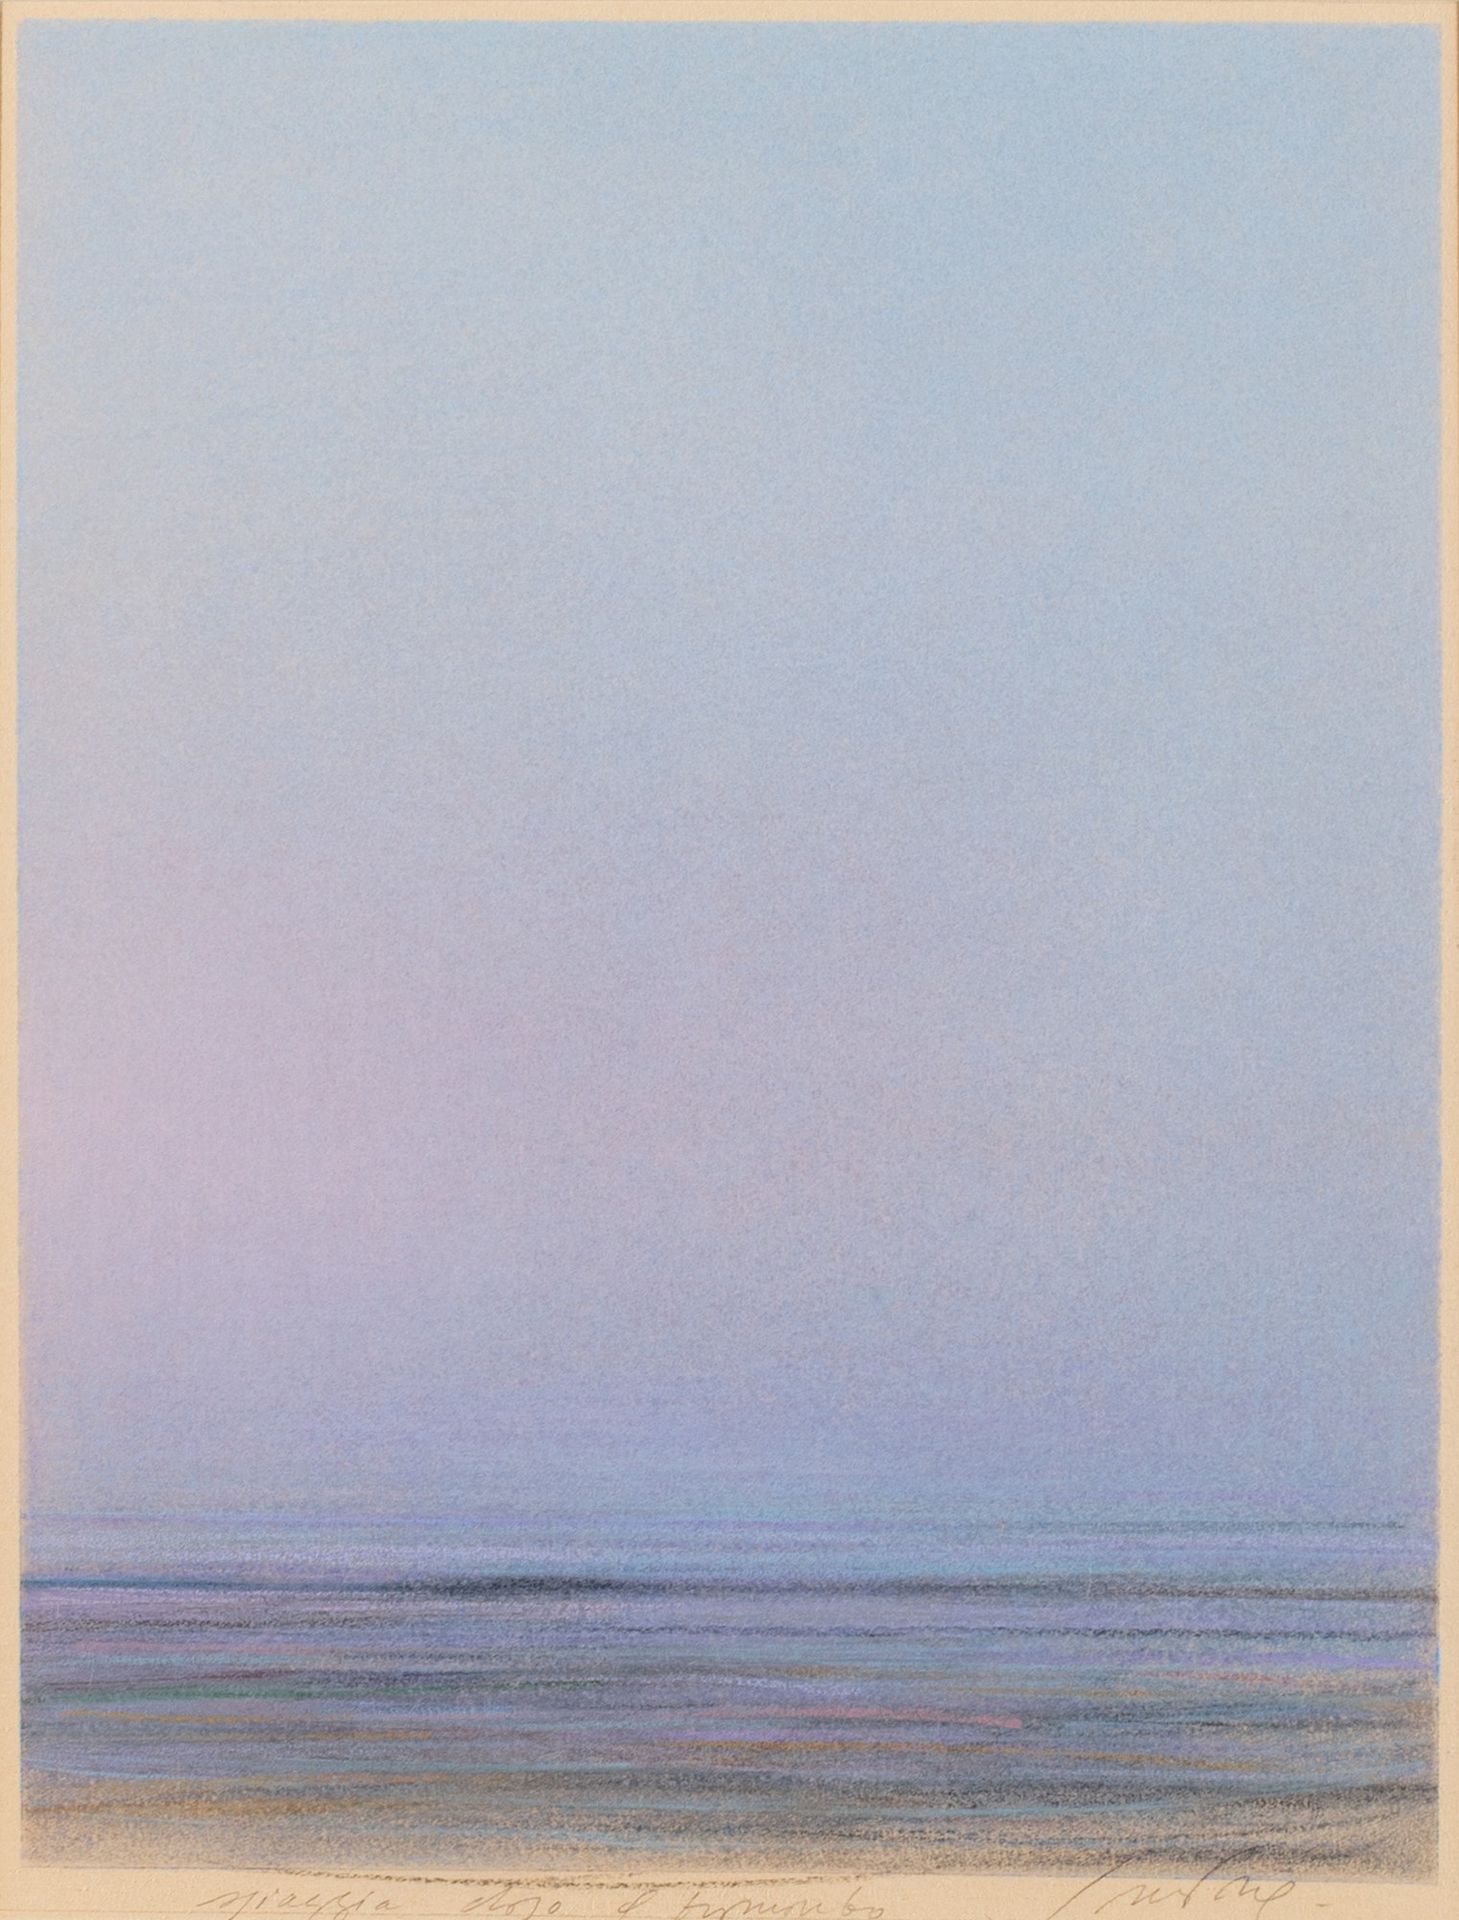 PIERO GUCCIONE 日落后的海滩，1993

彩色粉笔画，纸质
32 x 23 cm
右下方签名：Guccione

沿着下缘的标题：日落后的海滩

&hellip;